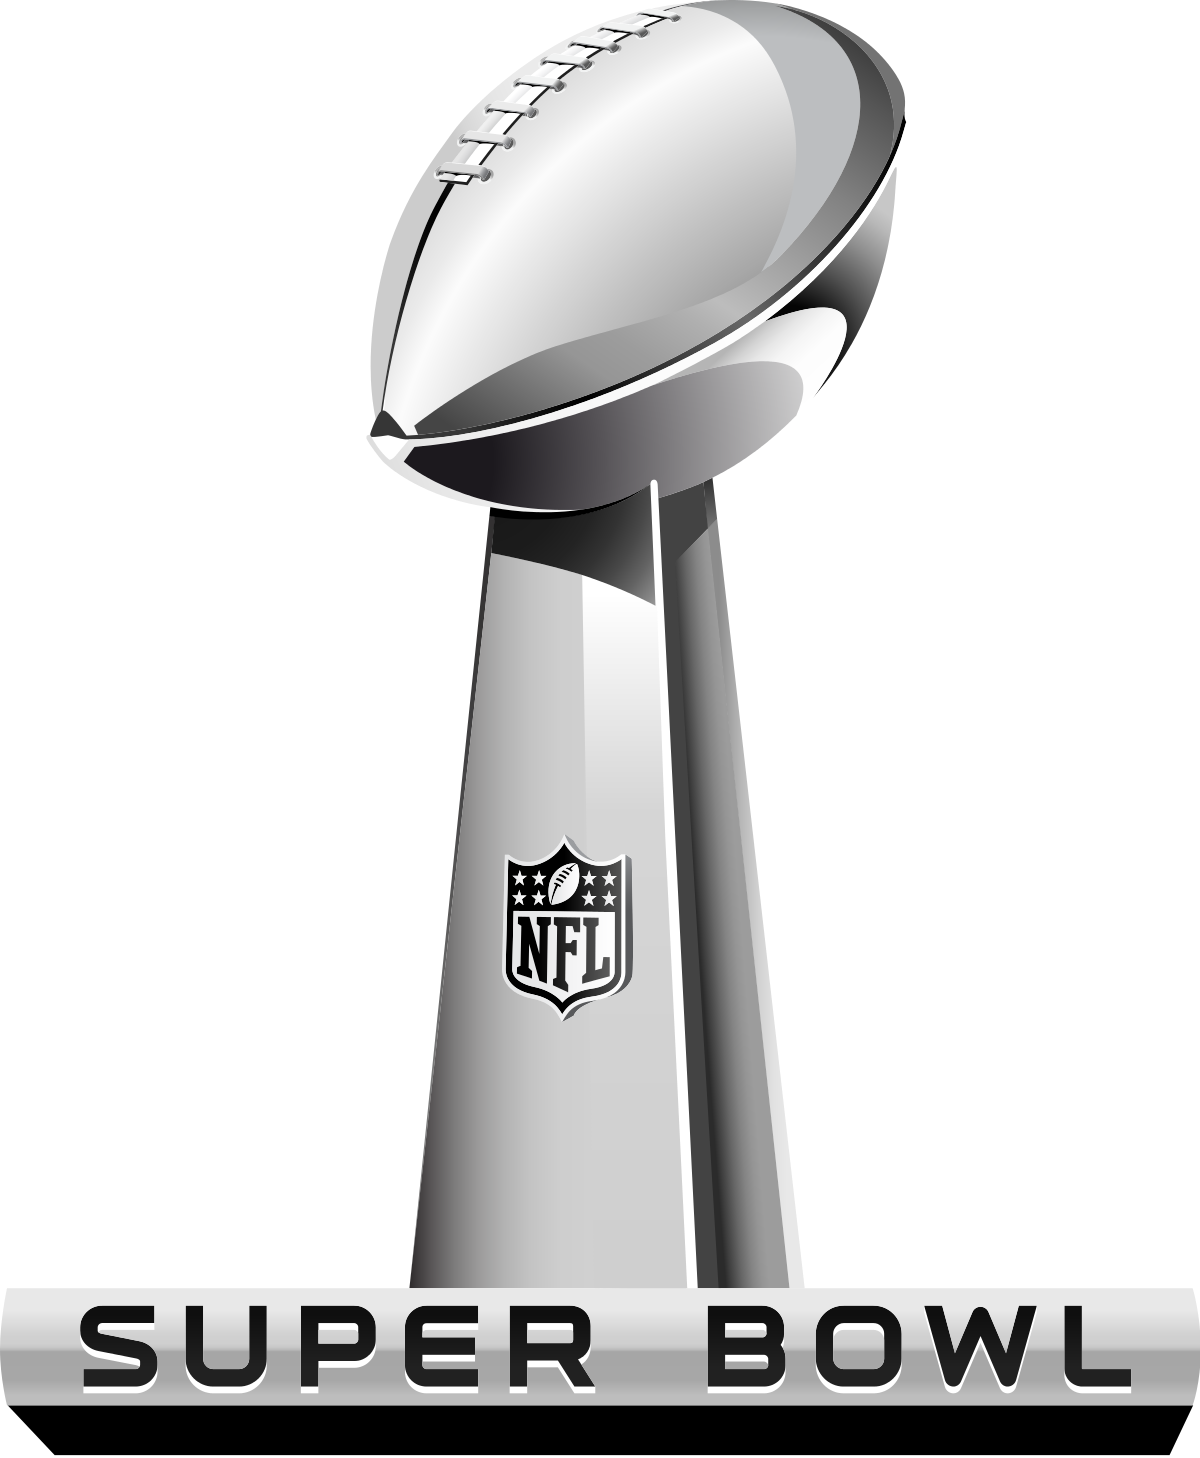 1200px-Super_Bowl_logo.png